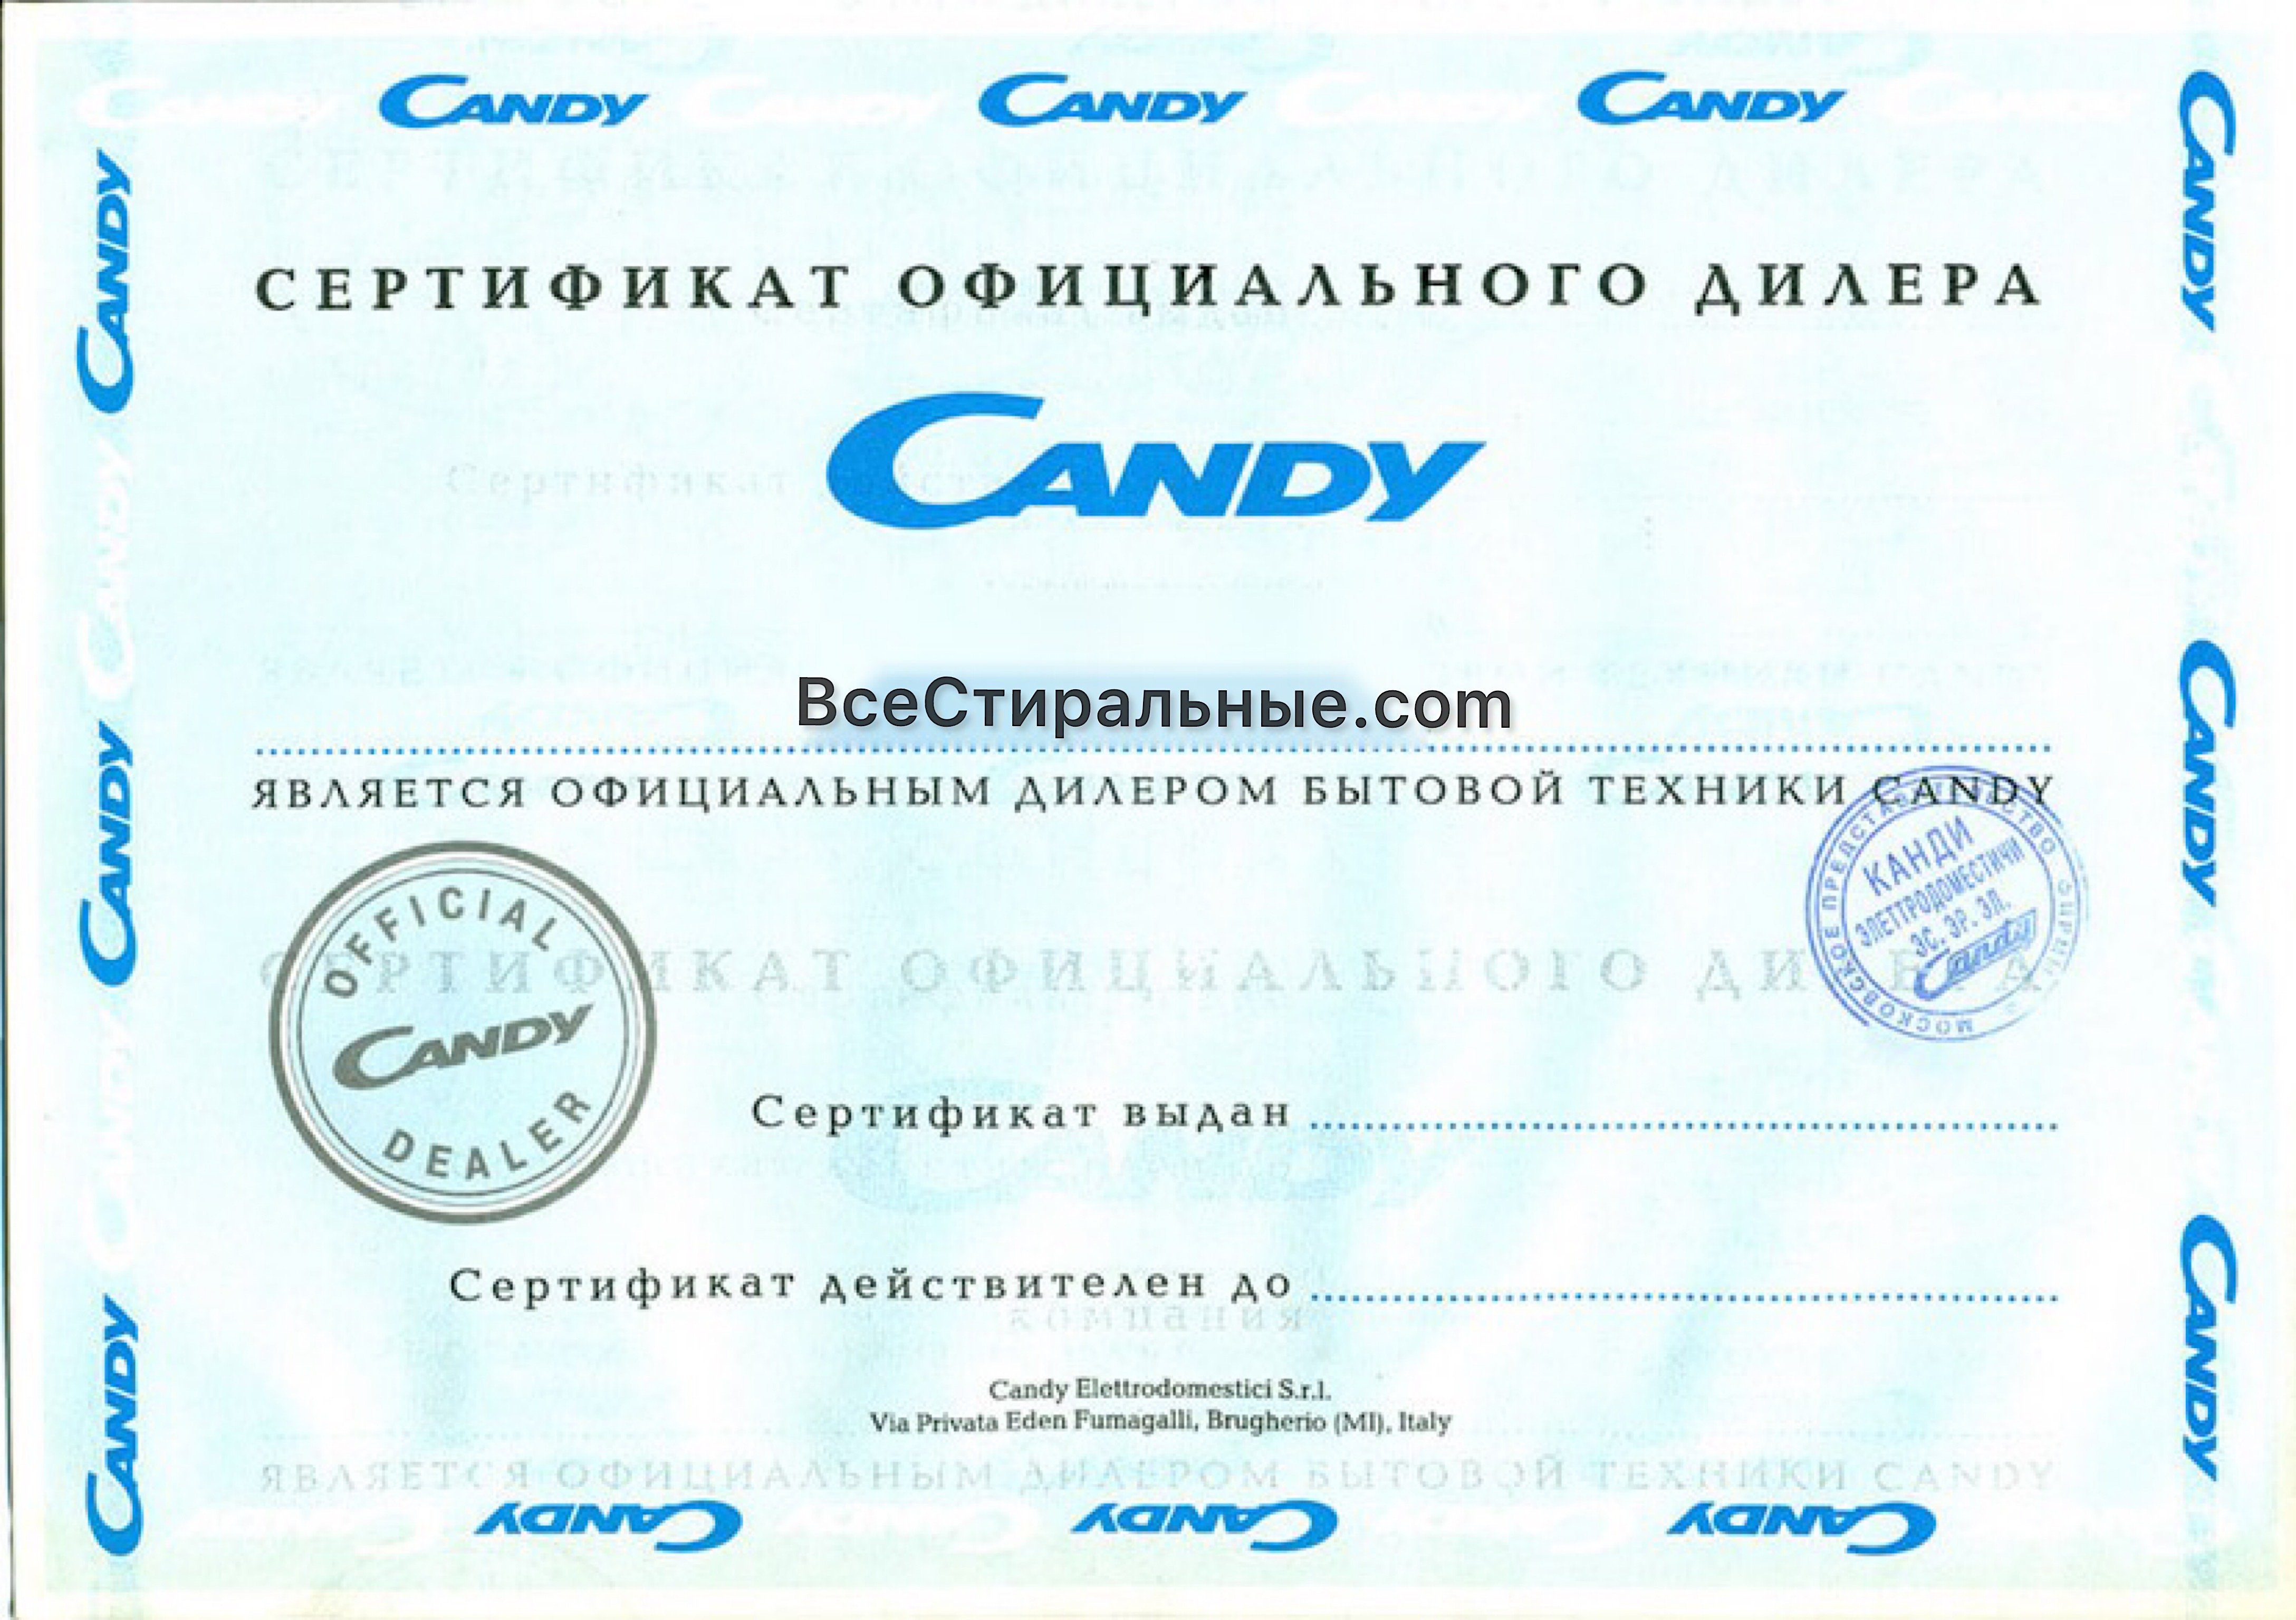 Candy CTD 1208